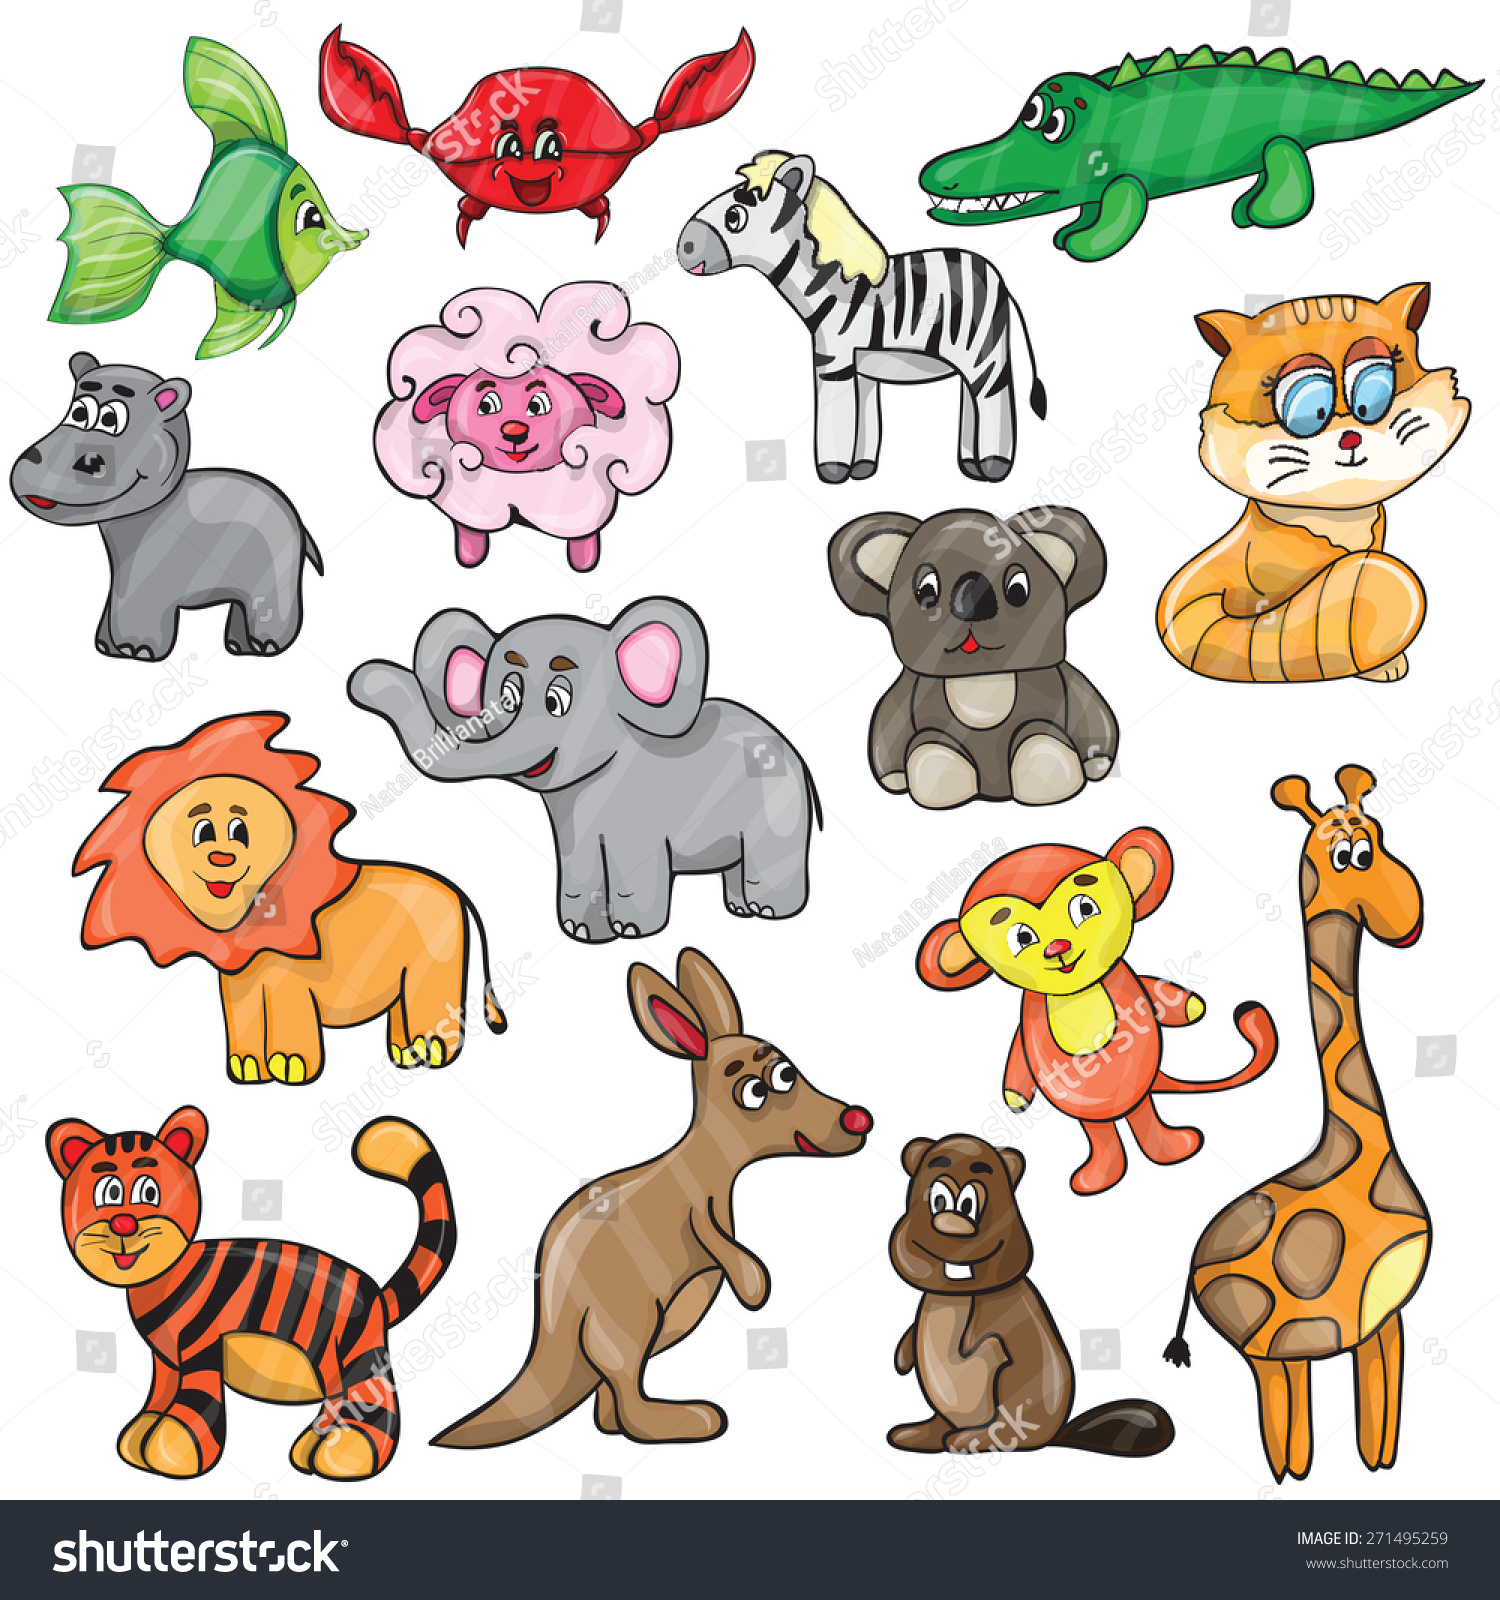 Vector Illustration With Cute Animals - Cartoon Set - 271495259 ...